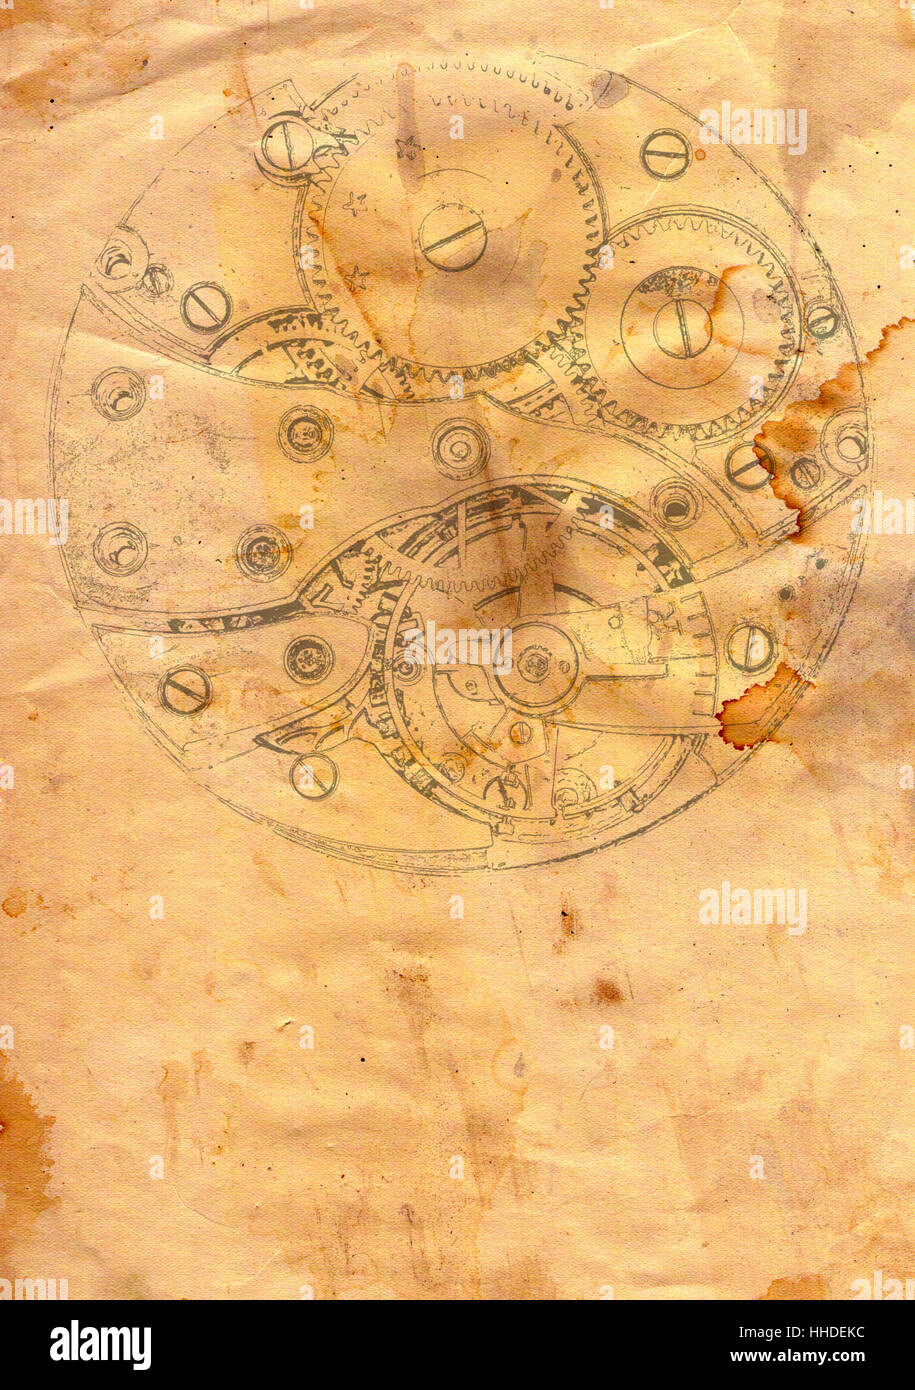 Clockwork mechanism on grunge paper Stock Photo